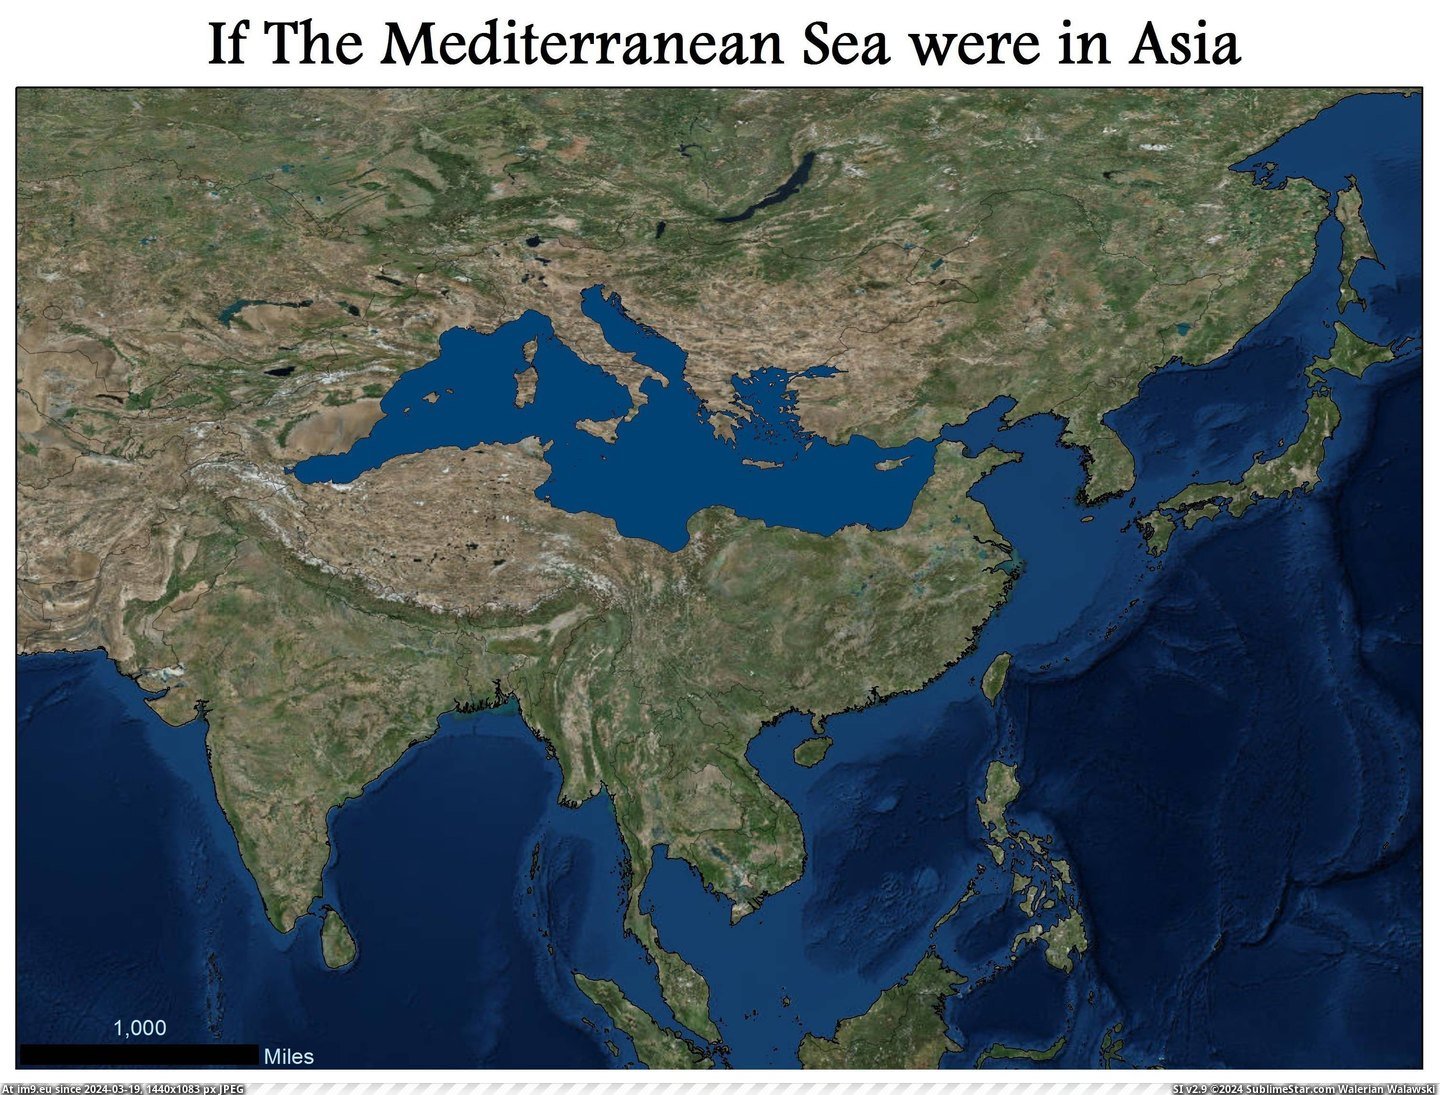 #Sea #Mediterranean #Asia [Mapporn] If the Mediterranean Sea were in Asia [3014x2279] Pic. (Изображение из альбом My r/MAPS favs))